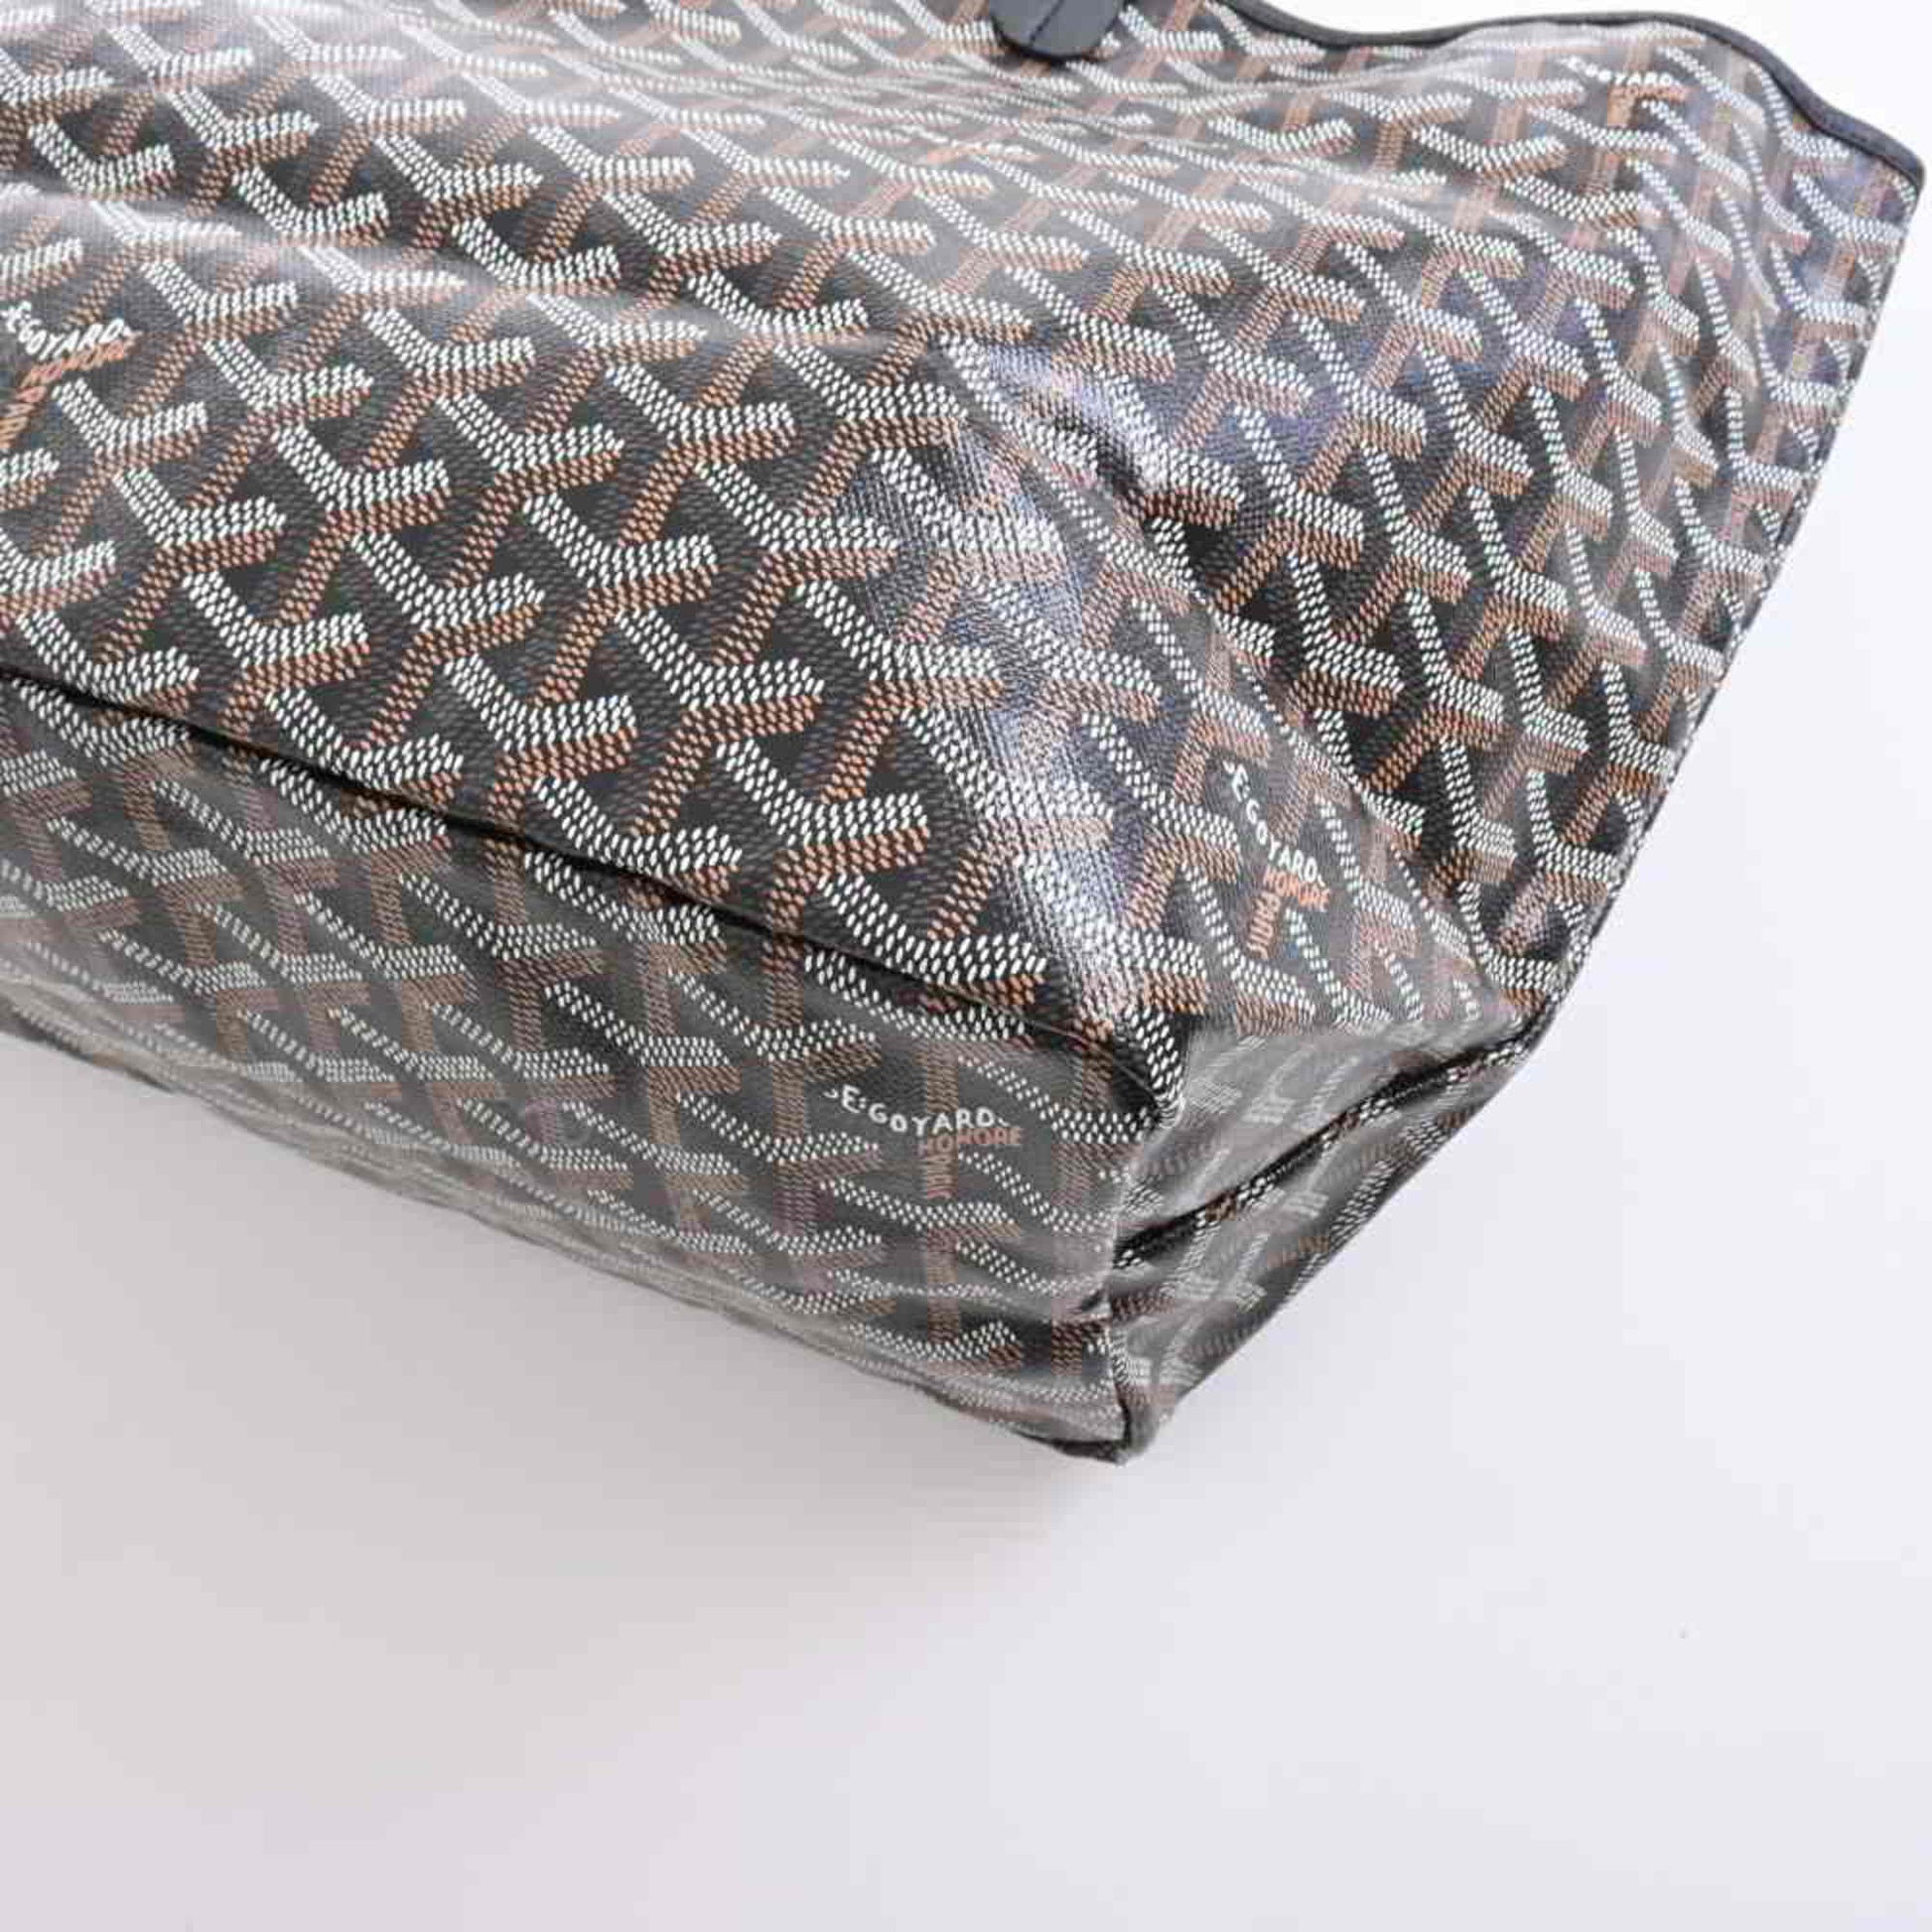 Goyard Saint Louis PM PVC Leather Tote Bag Grey - THE PURSE AFFAIR